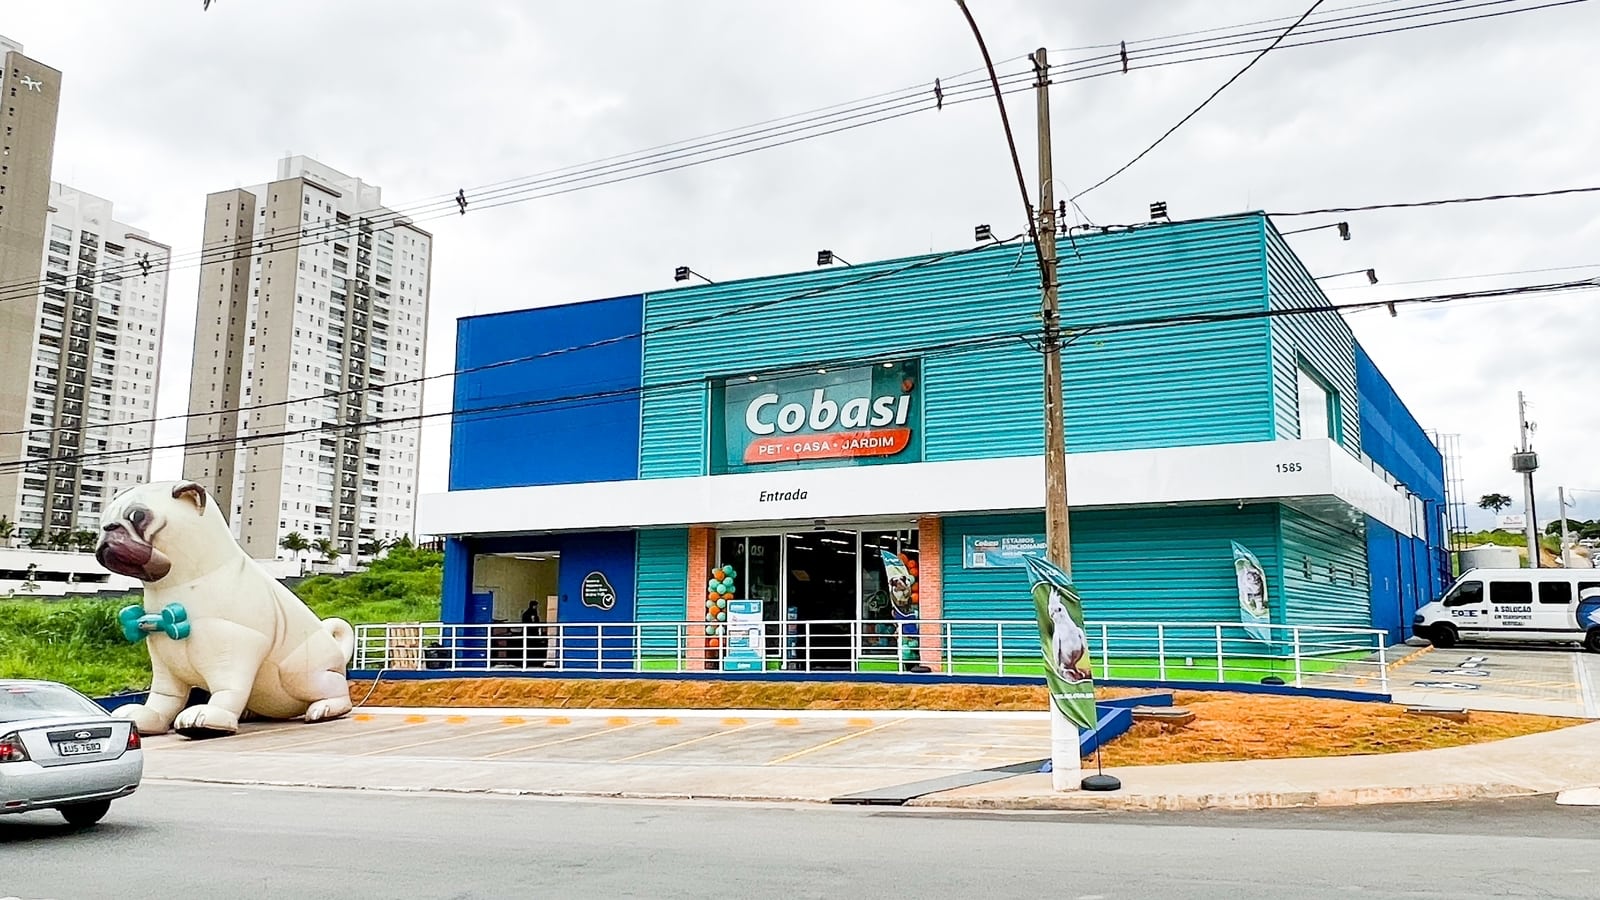 Cobasi inaugura loja de número 100 - Blog da Cobasi